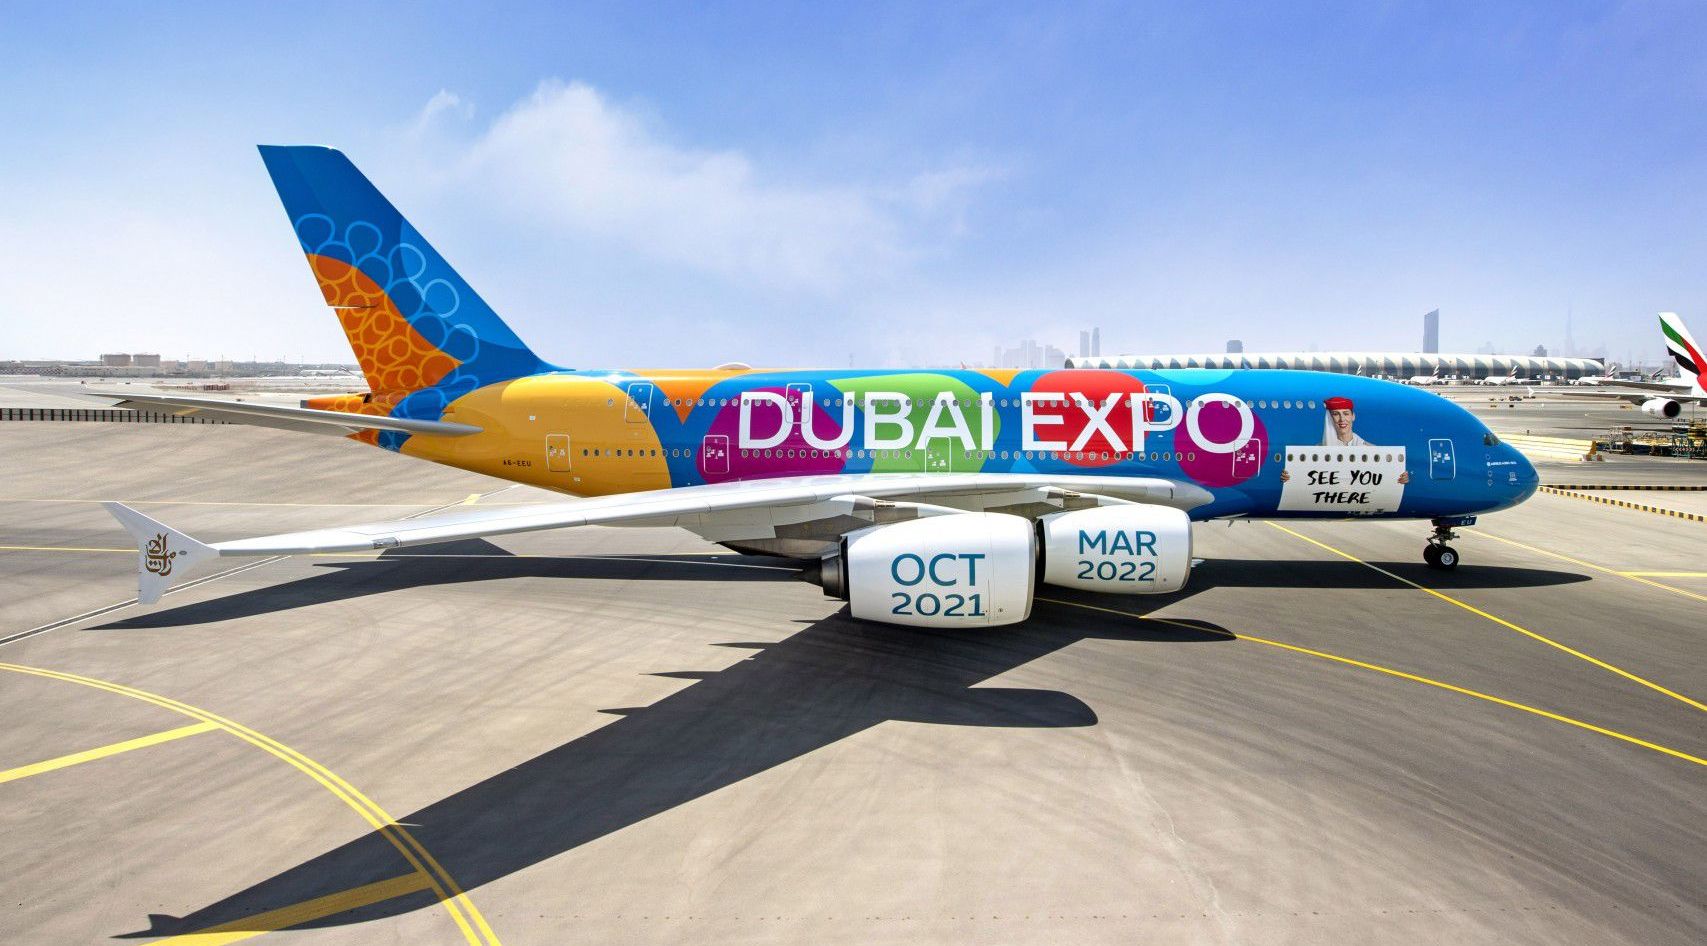 Emirates Arrivals Get Free Covid 19 Test Using Expo 2020 Dubai Ticket